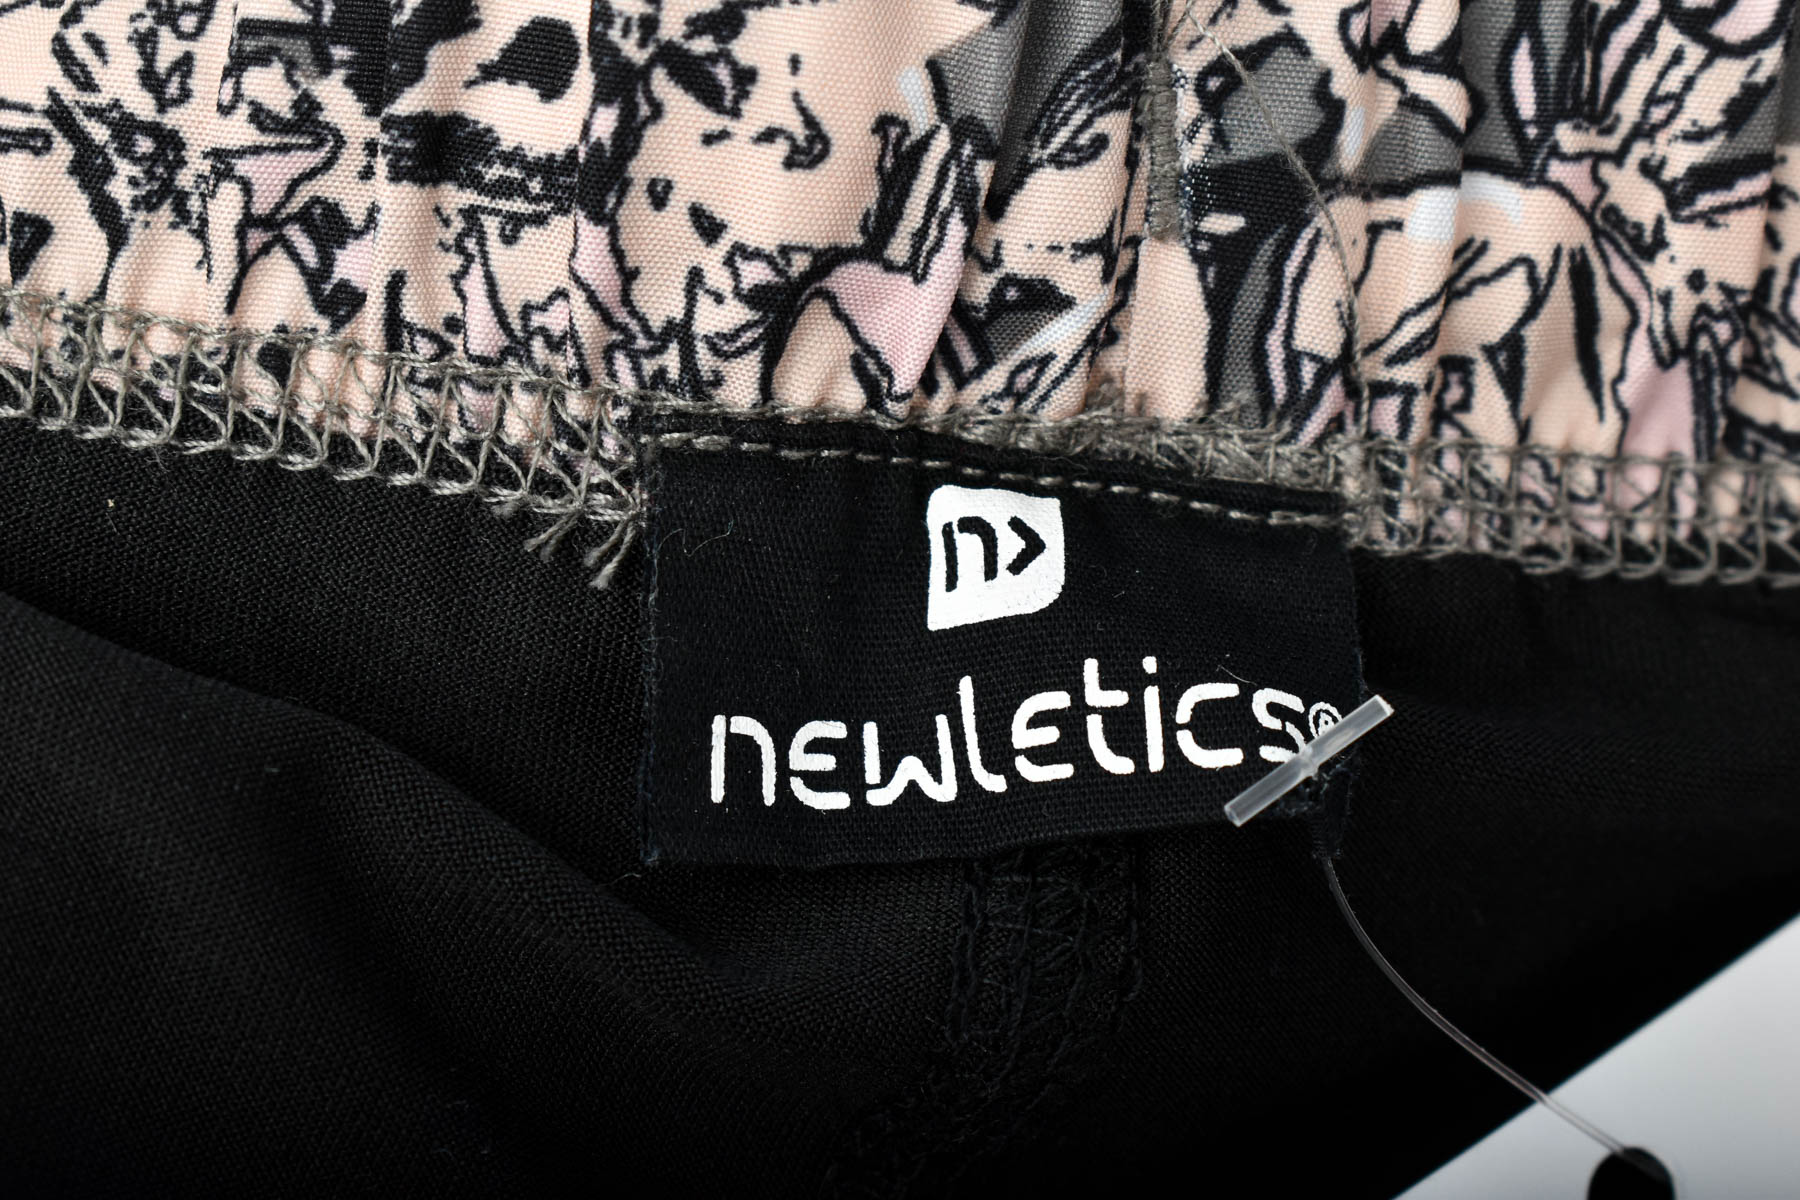 Women's shorts - Newletics - 2